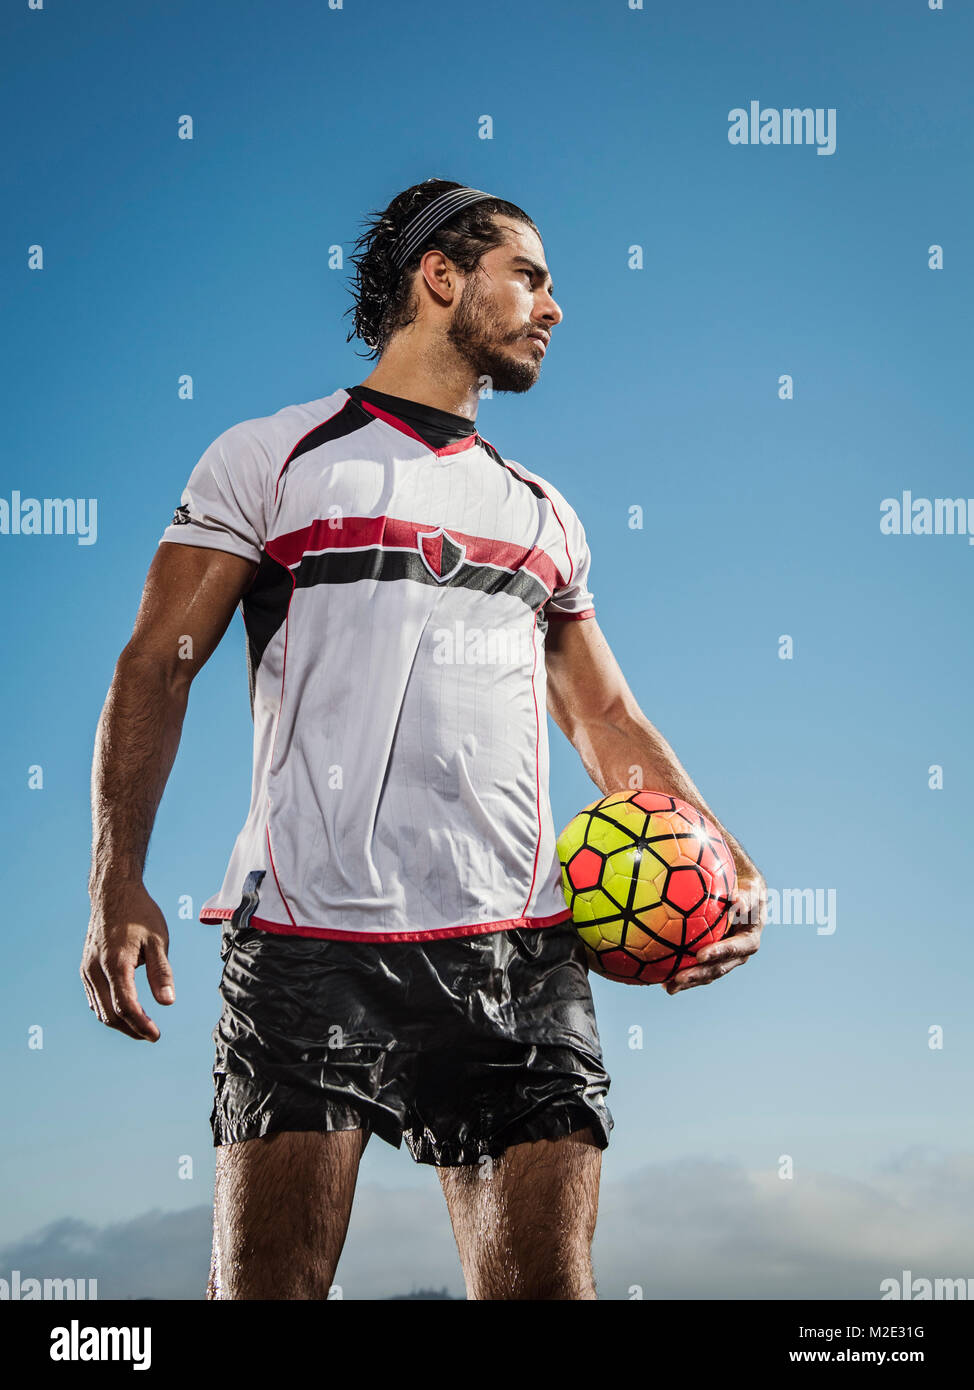 Hispanic man holding soccer ball Stock Photo